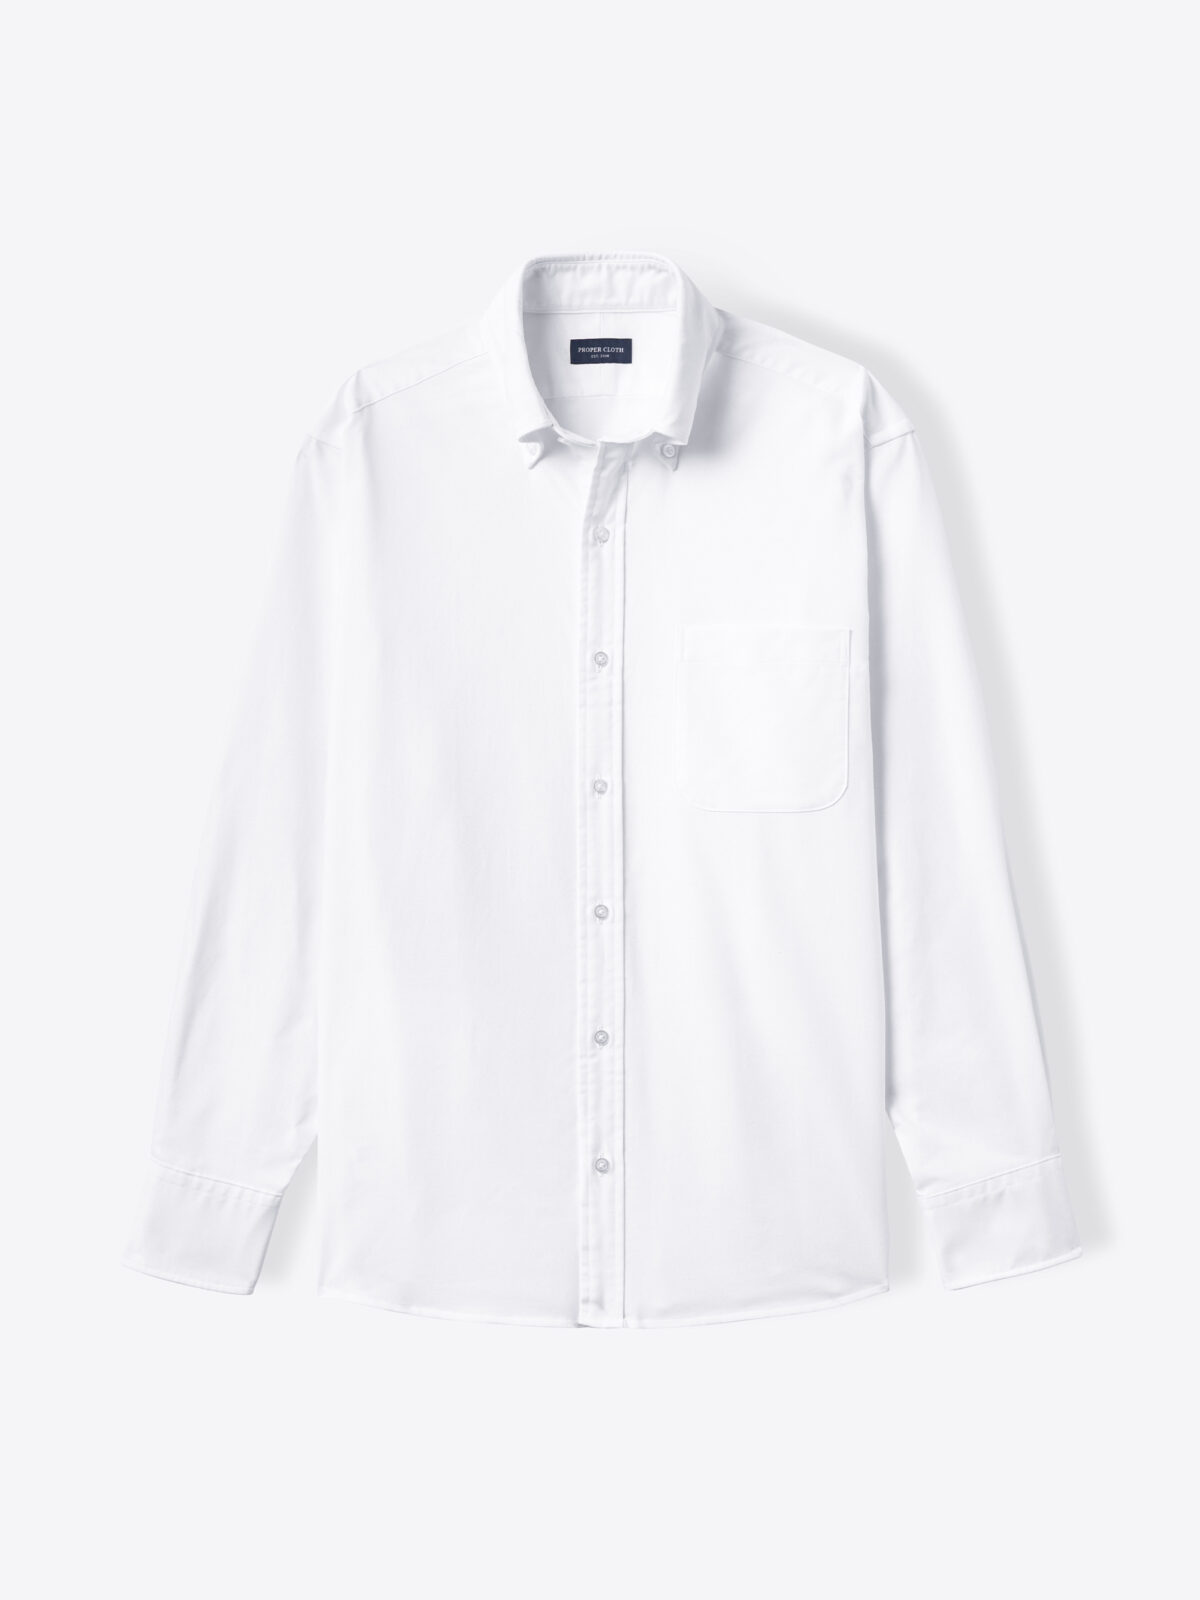 Thomas Mason White Premium Oxford Cloth Shirt by Proper Cloth